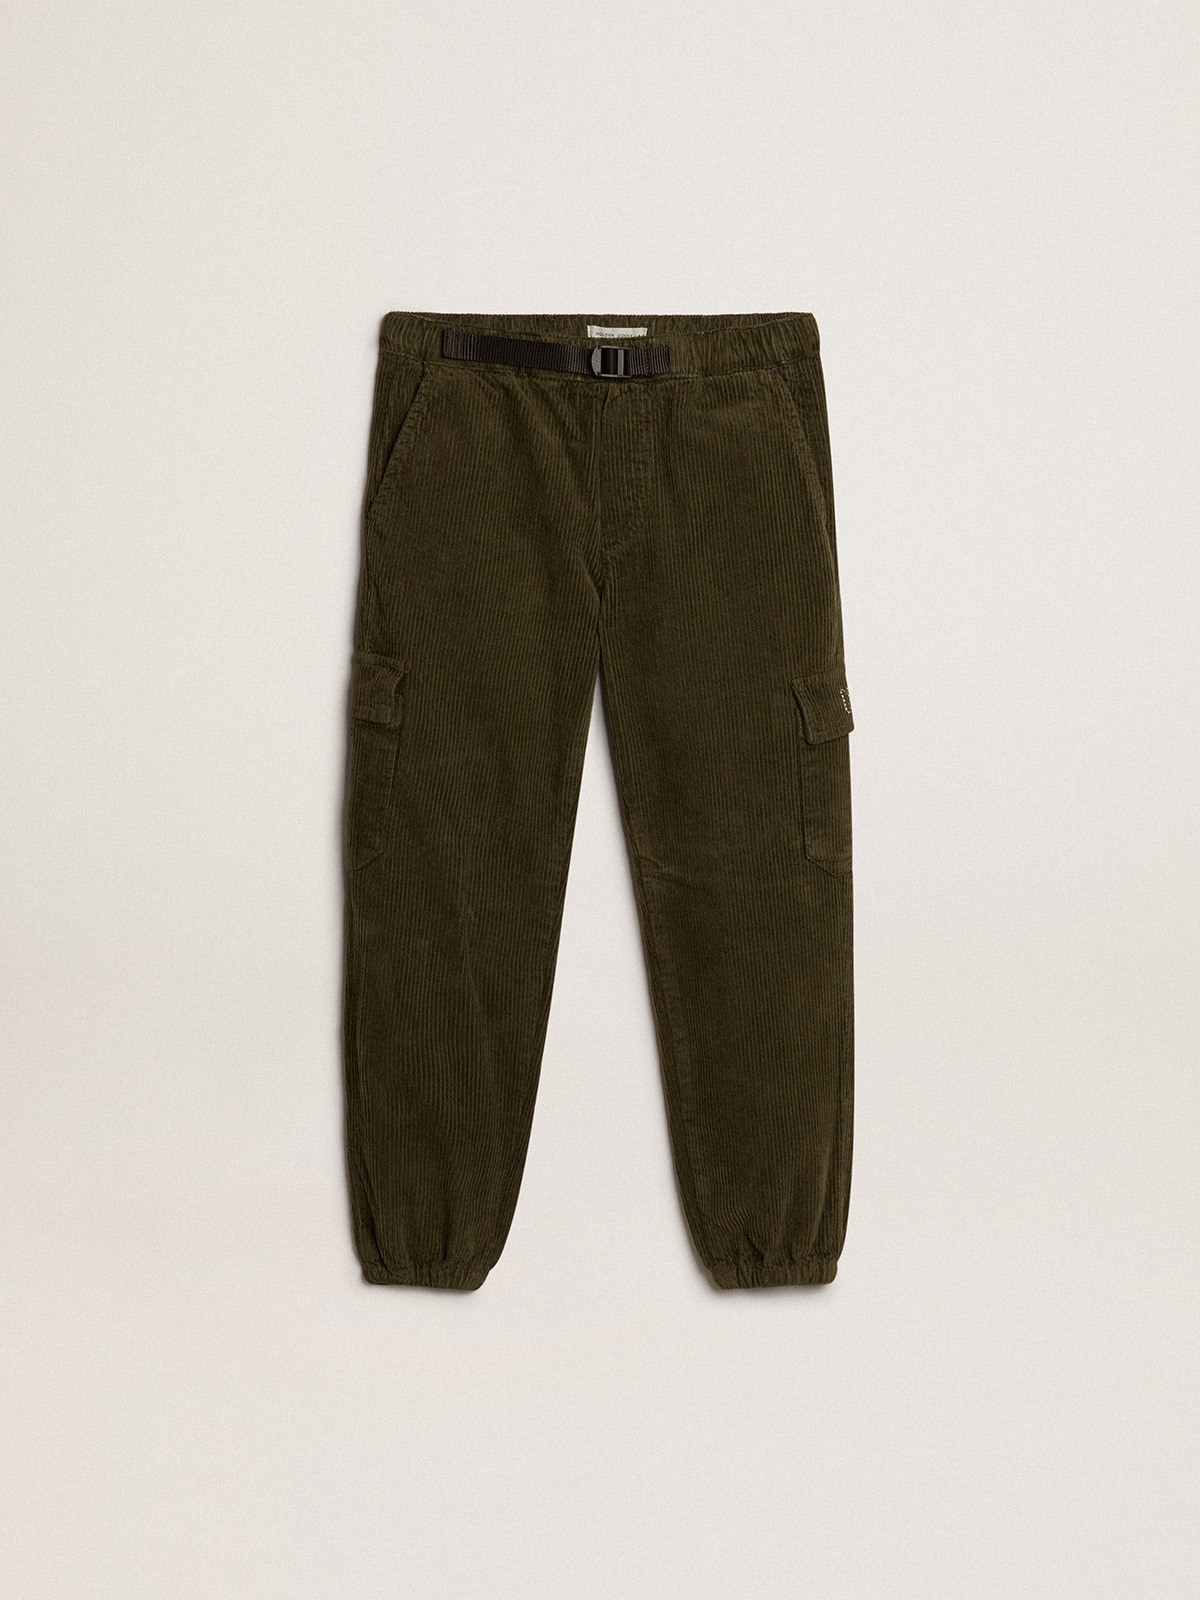 Dark green cotton cargo pants